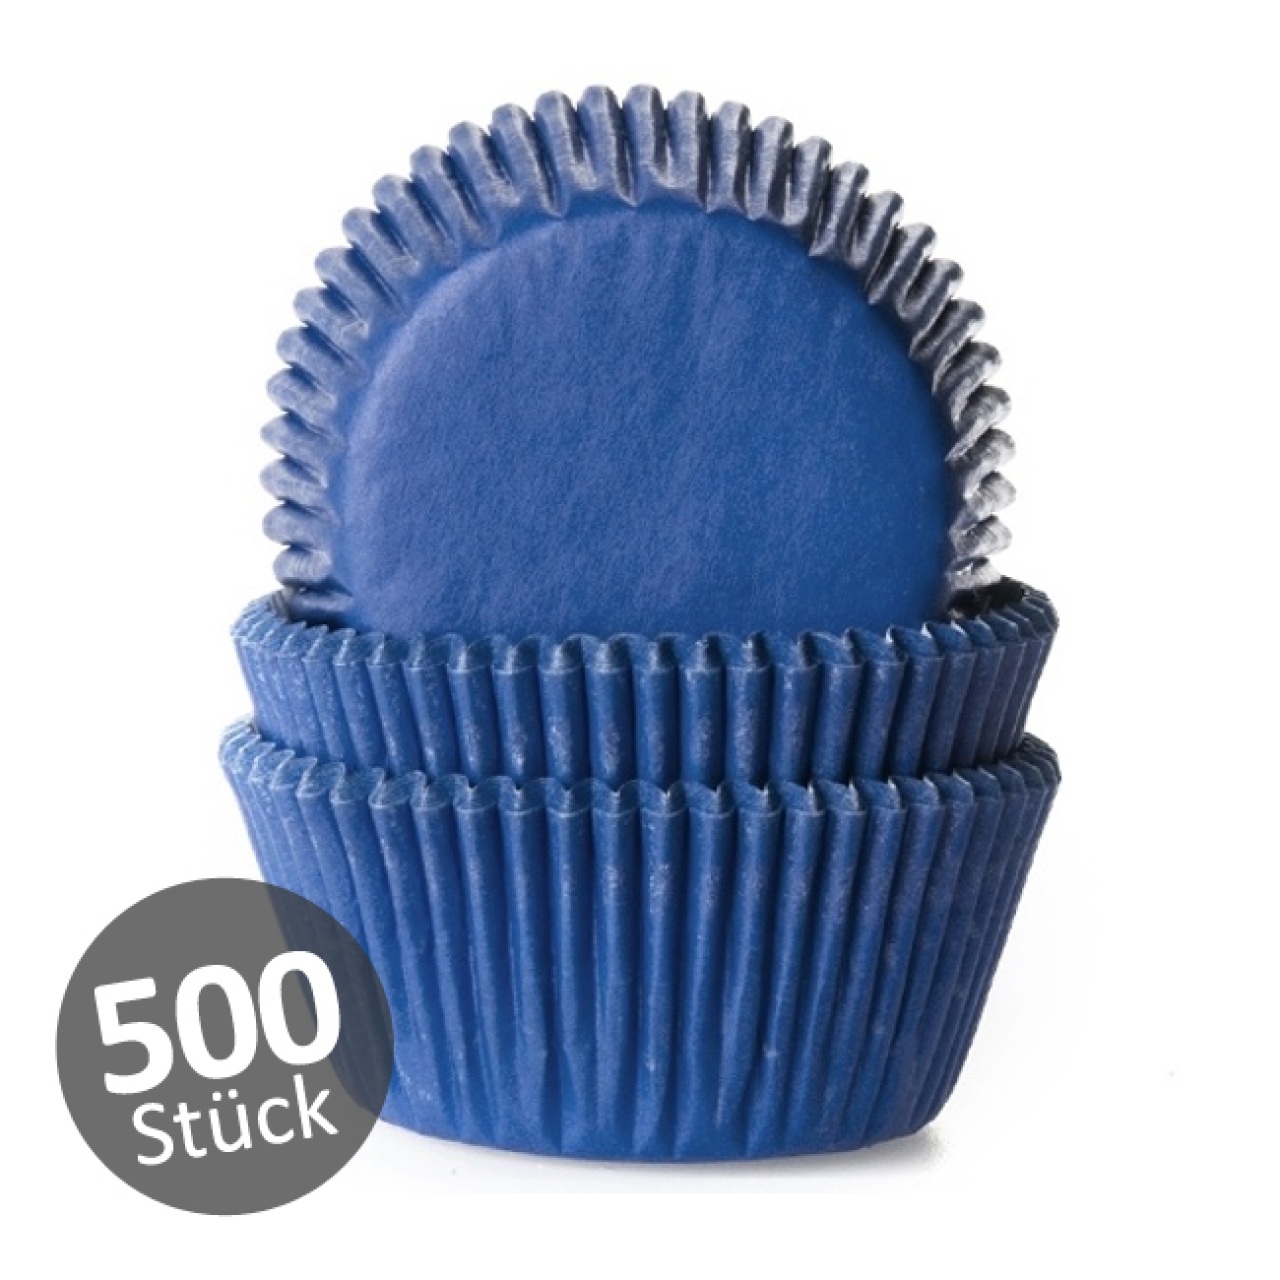 Muffinförmchen "Royal blau", Große Menge, 500 Stck.